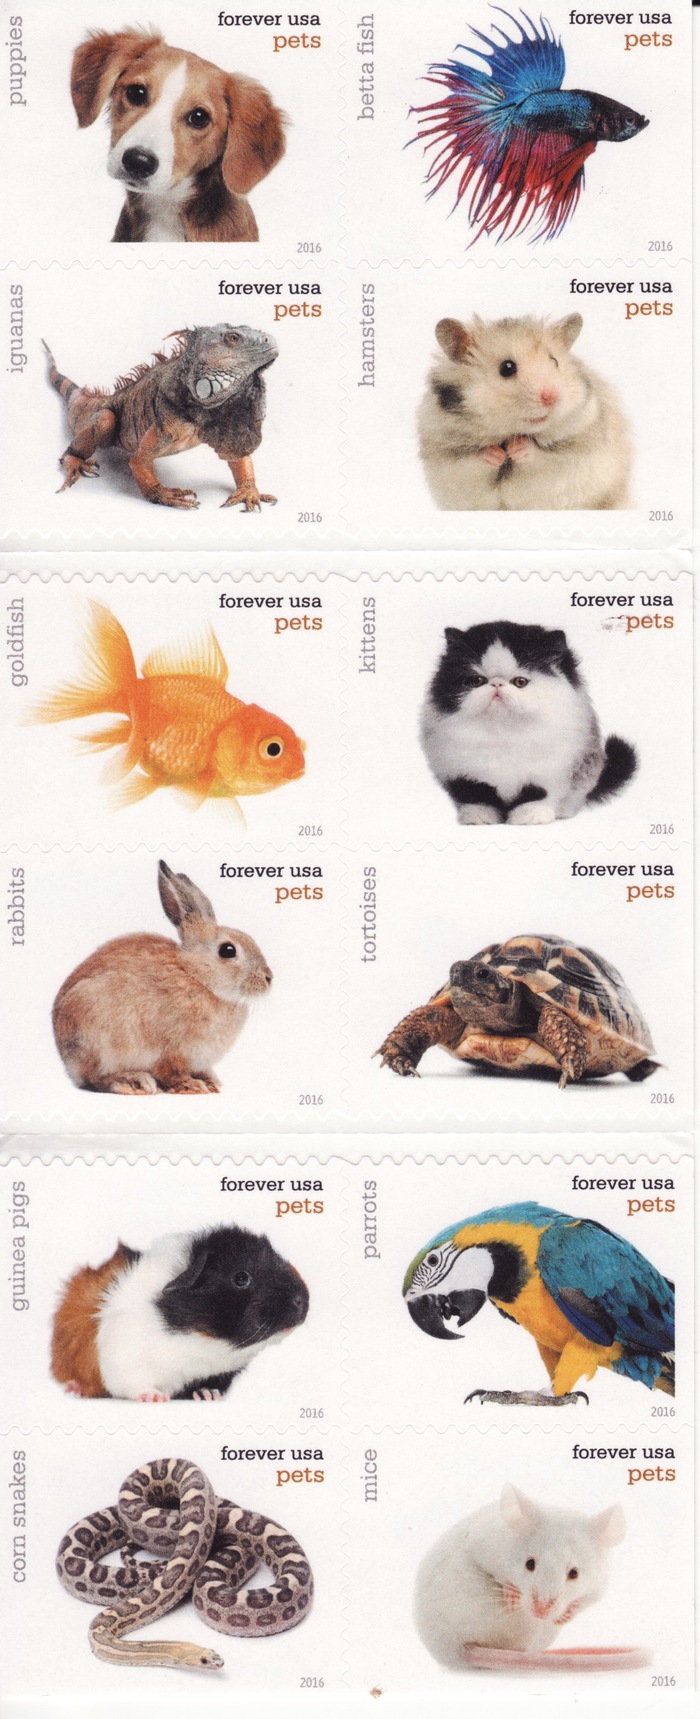 USPS “Pets” postage stamps 2